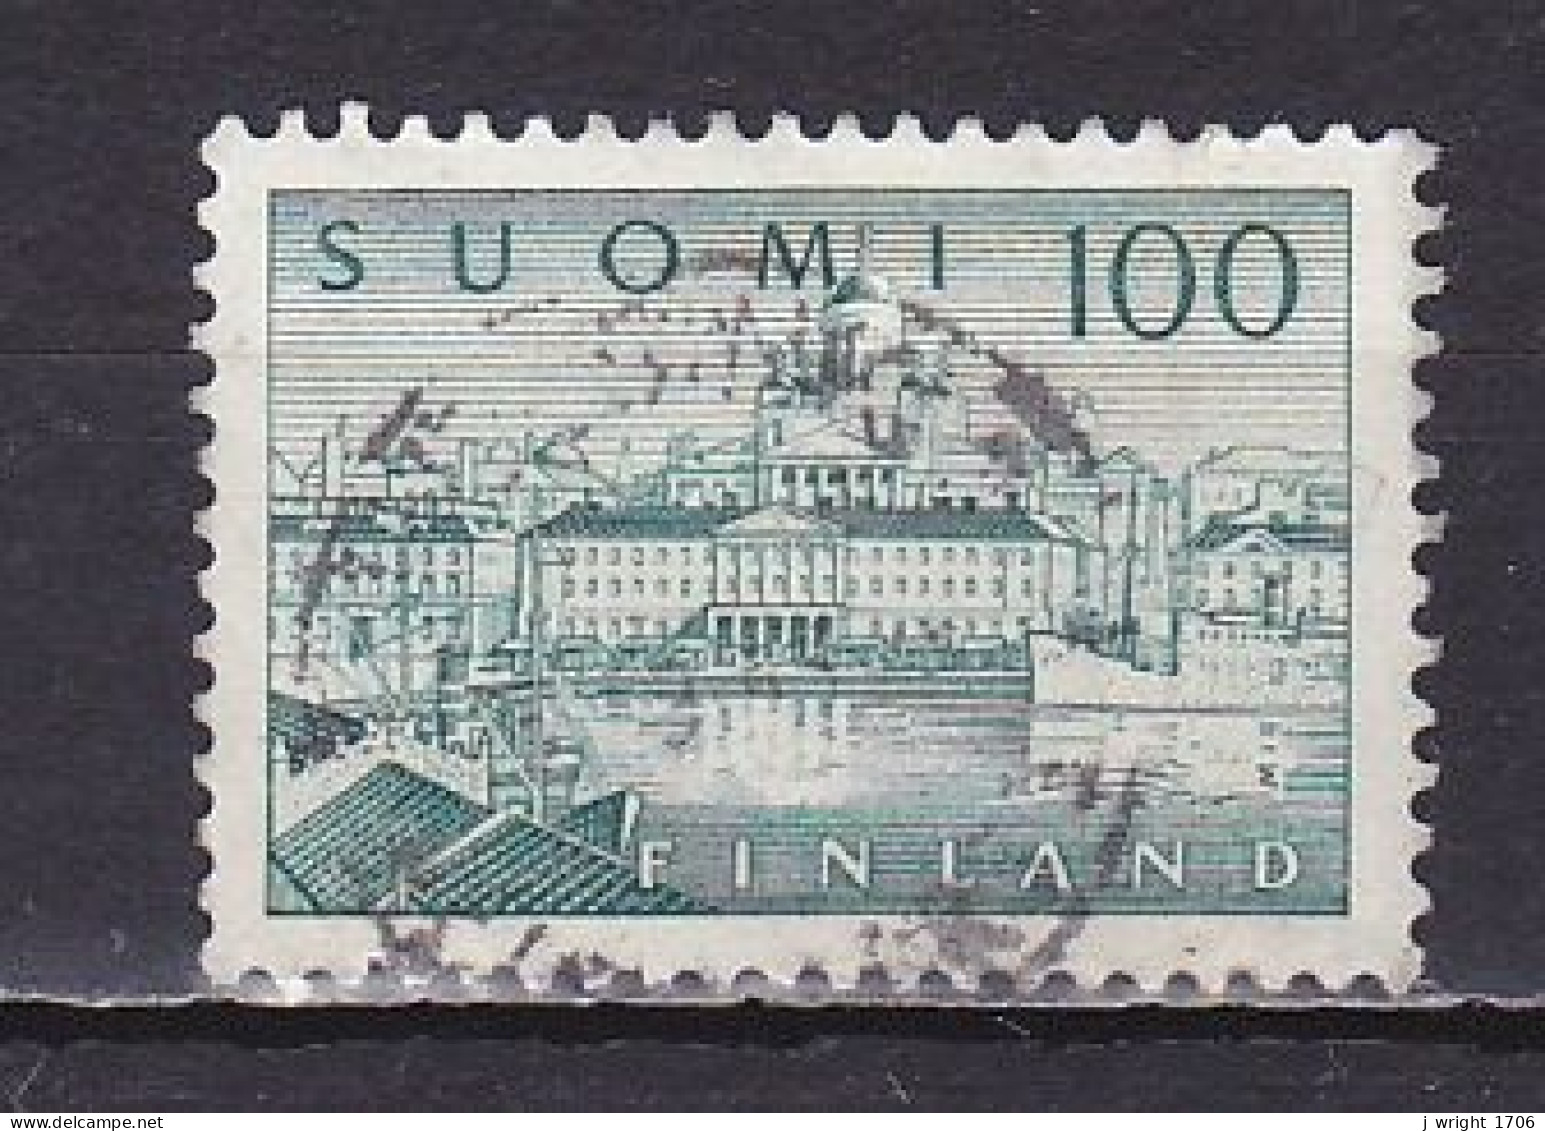 Finland, 1958, Helsinki Harbour, 100mk, USED - Usati